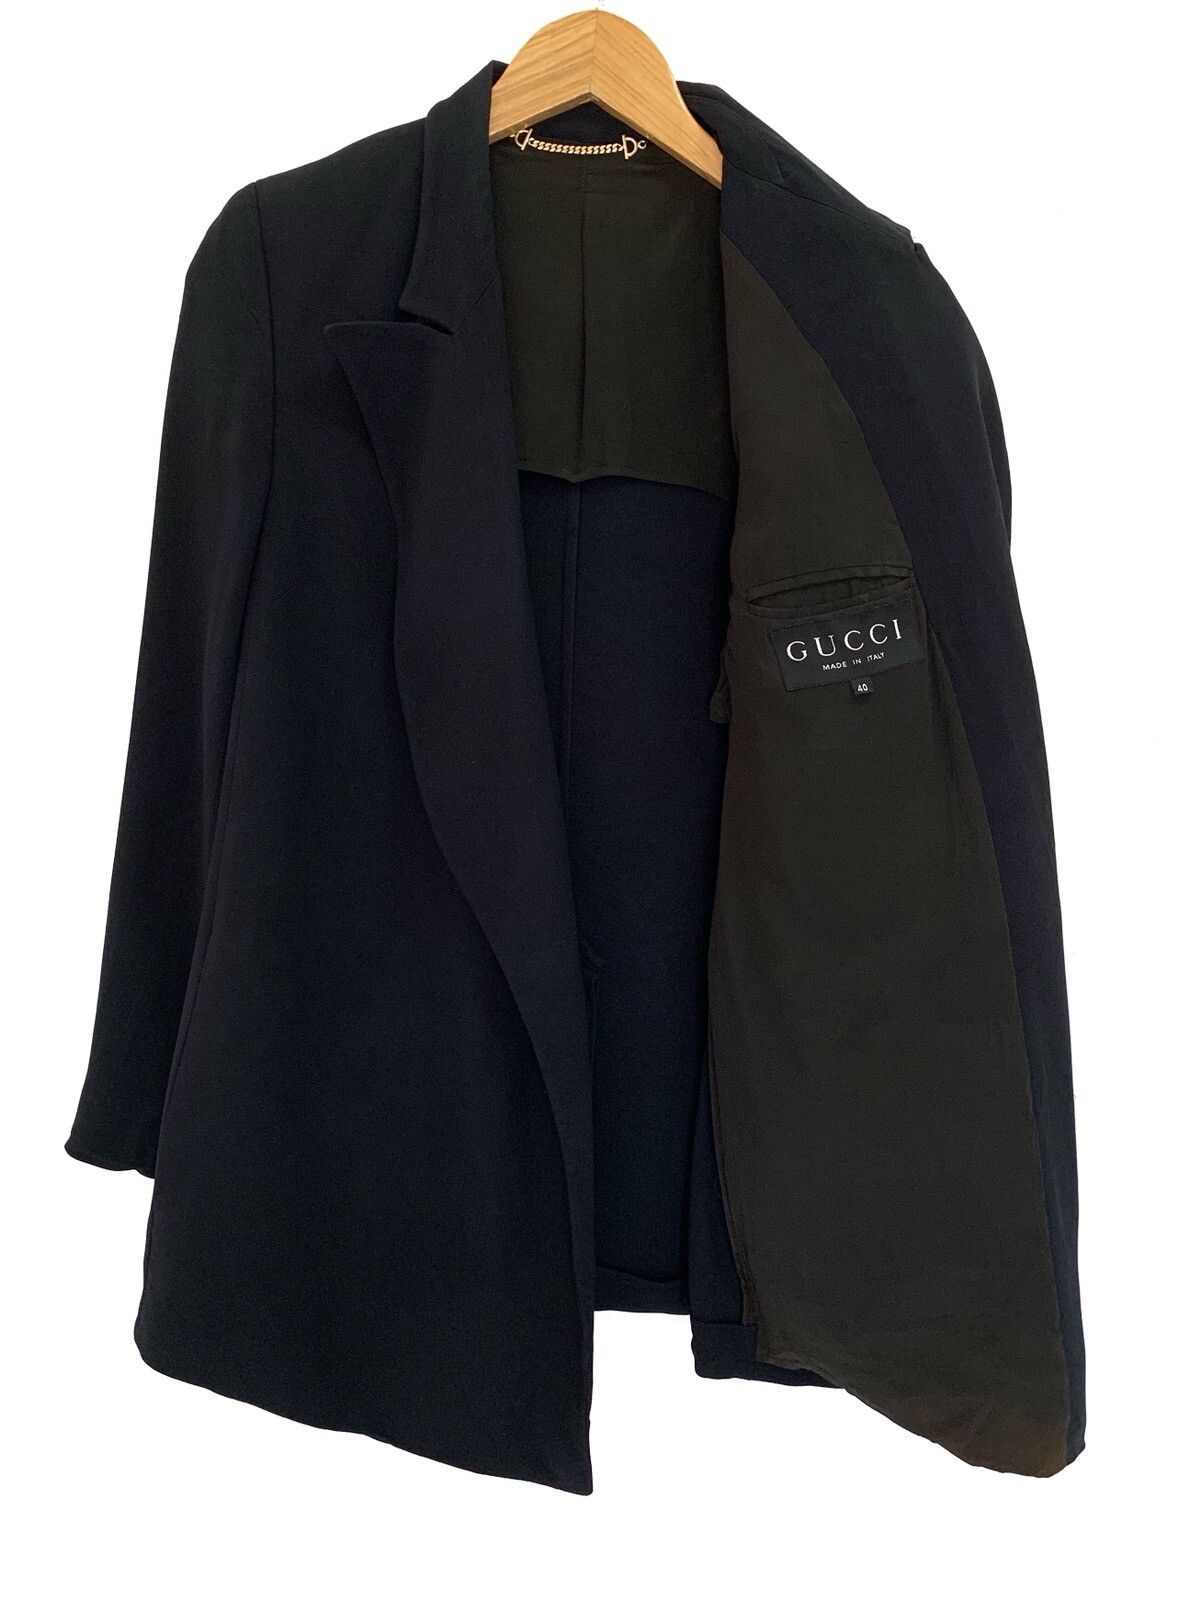 Gucci GUCCI Black Cardigan Blazer Jacket Size US S / EU 44-46 / 1 - 4 Thumbnail